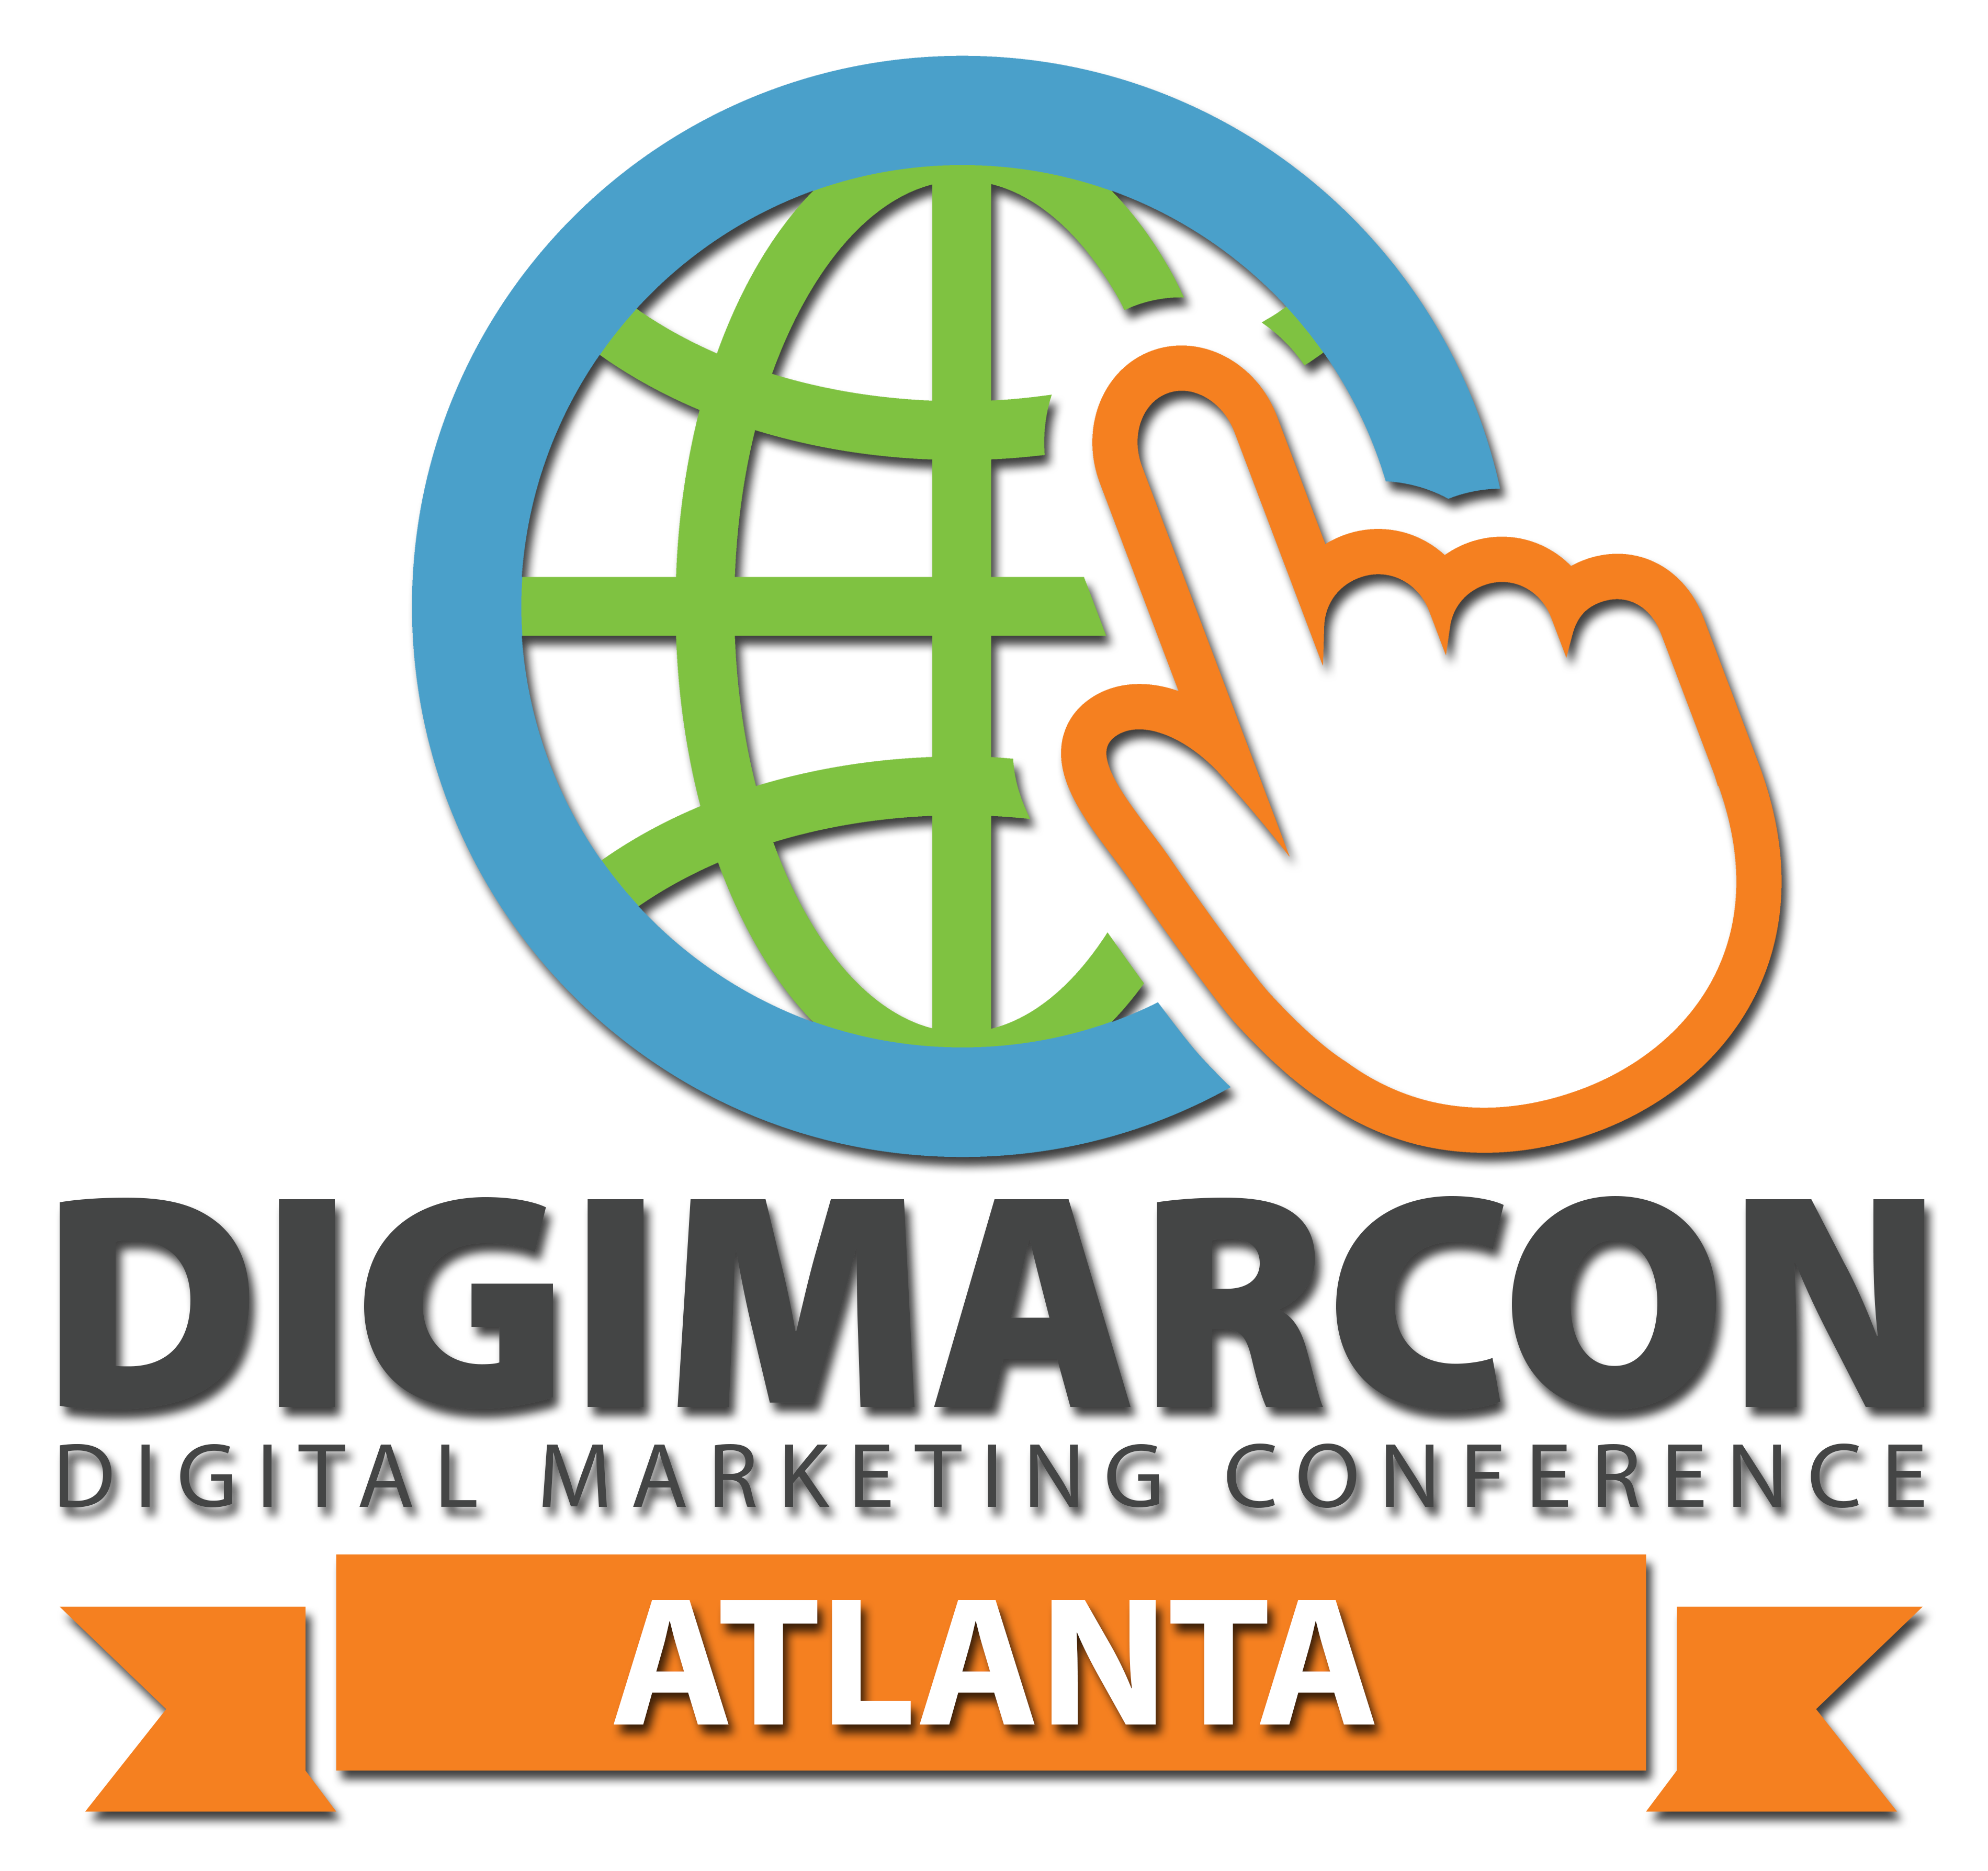 DigiMarCon Charlotte – Digital Marketing Conference & Exhibition